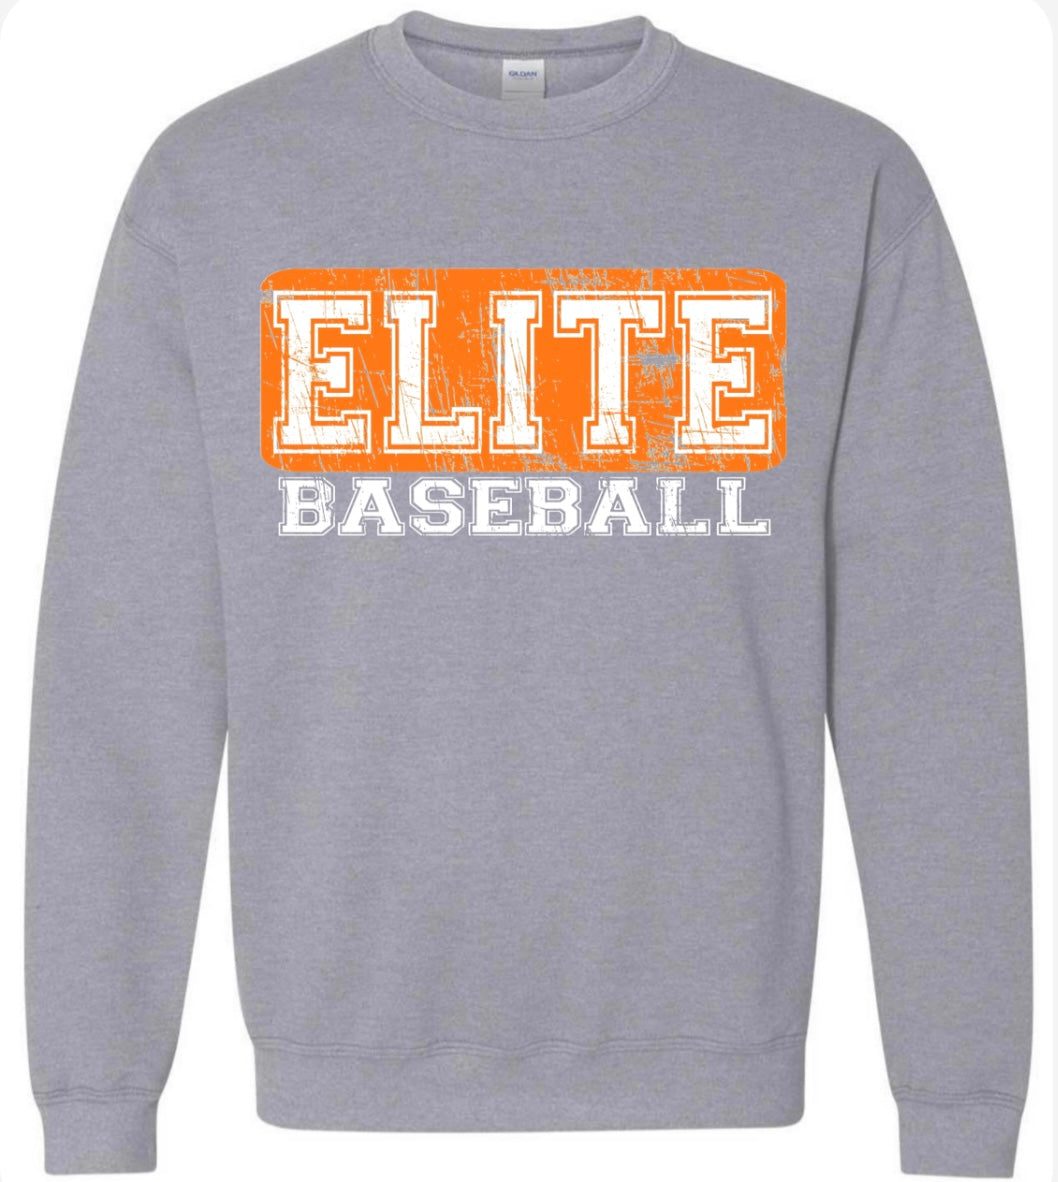 Distressed Elite Baseball Sweatshirt